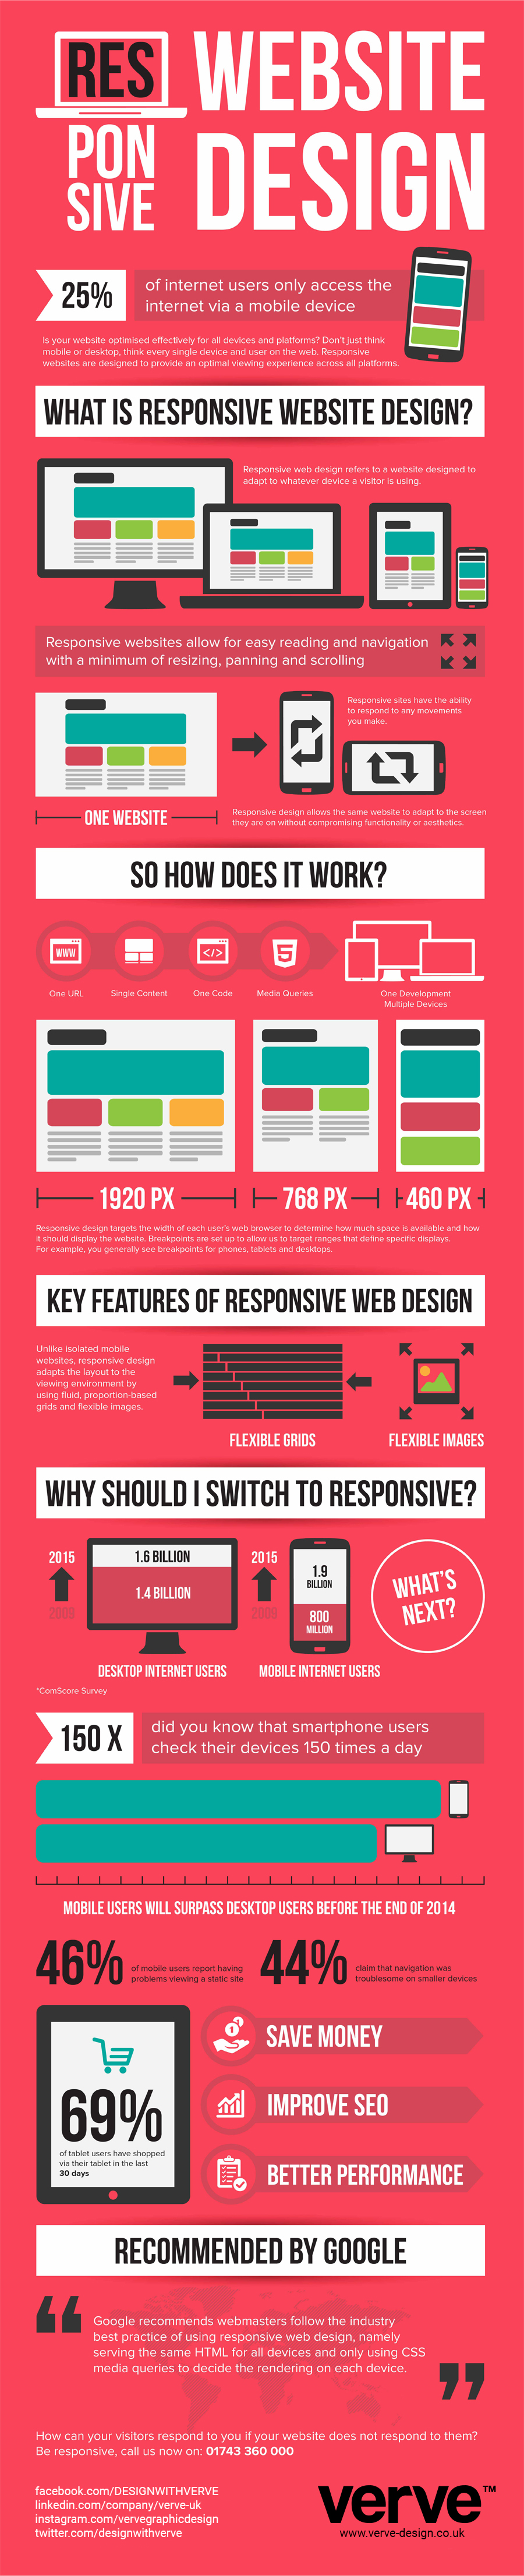 Responsive web design thesis